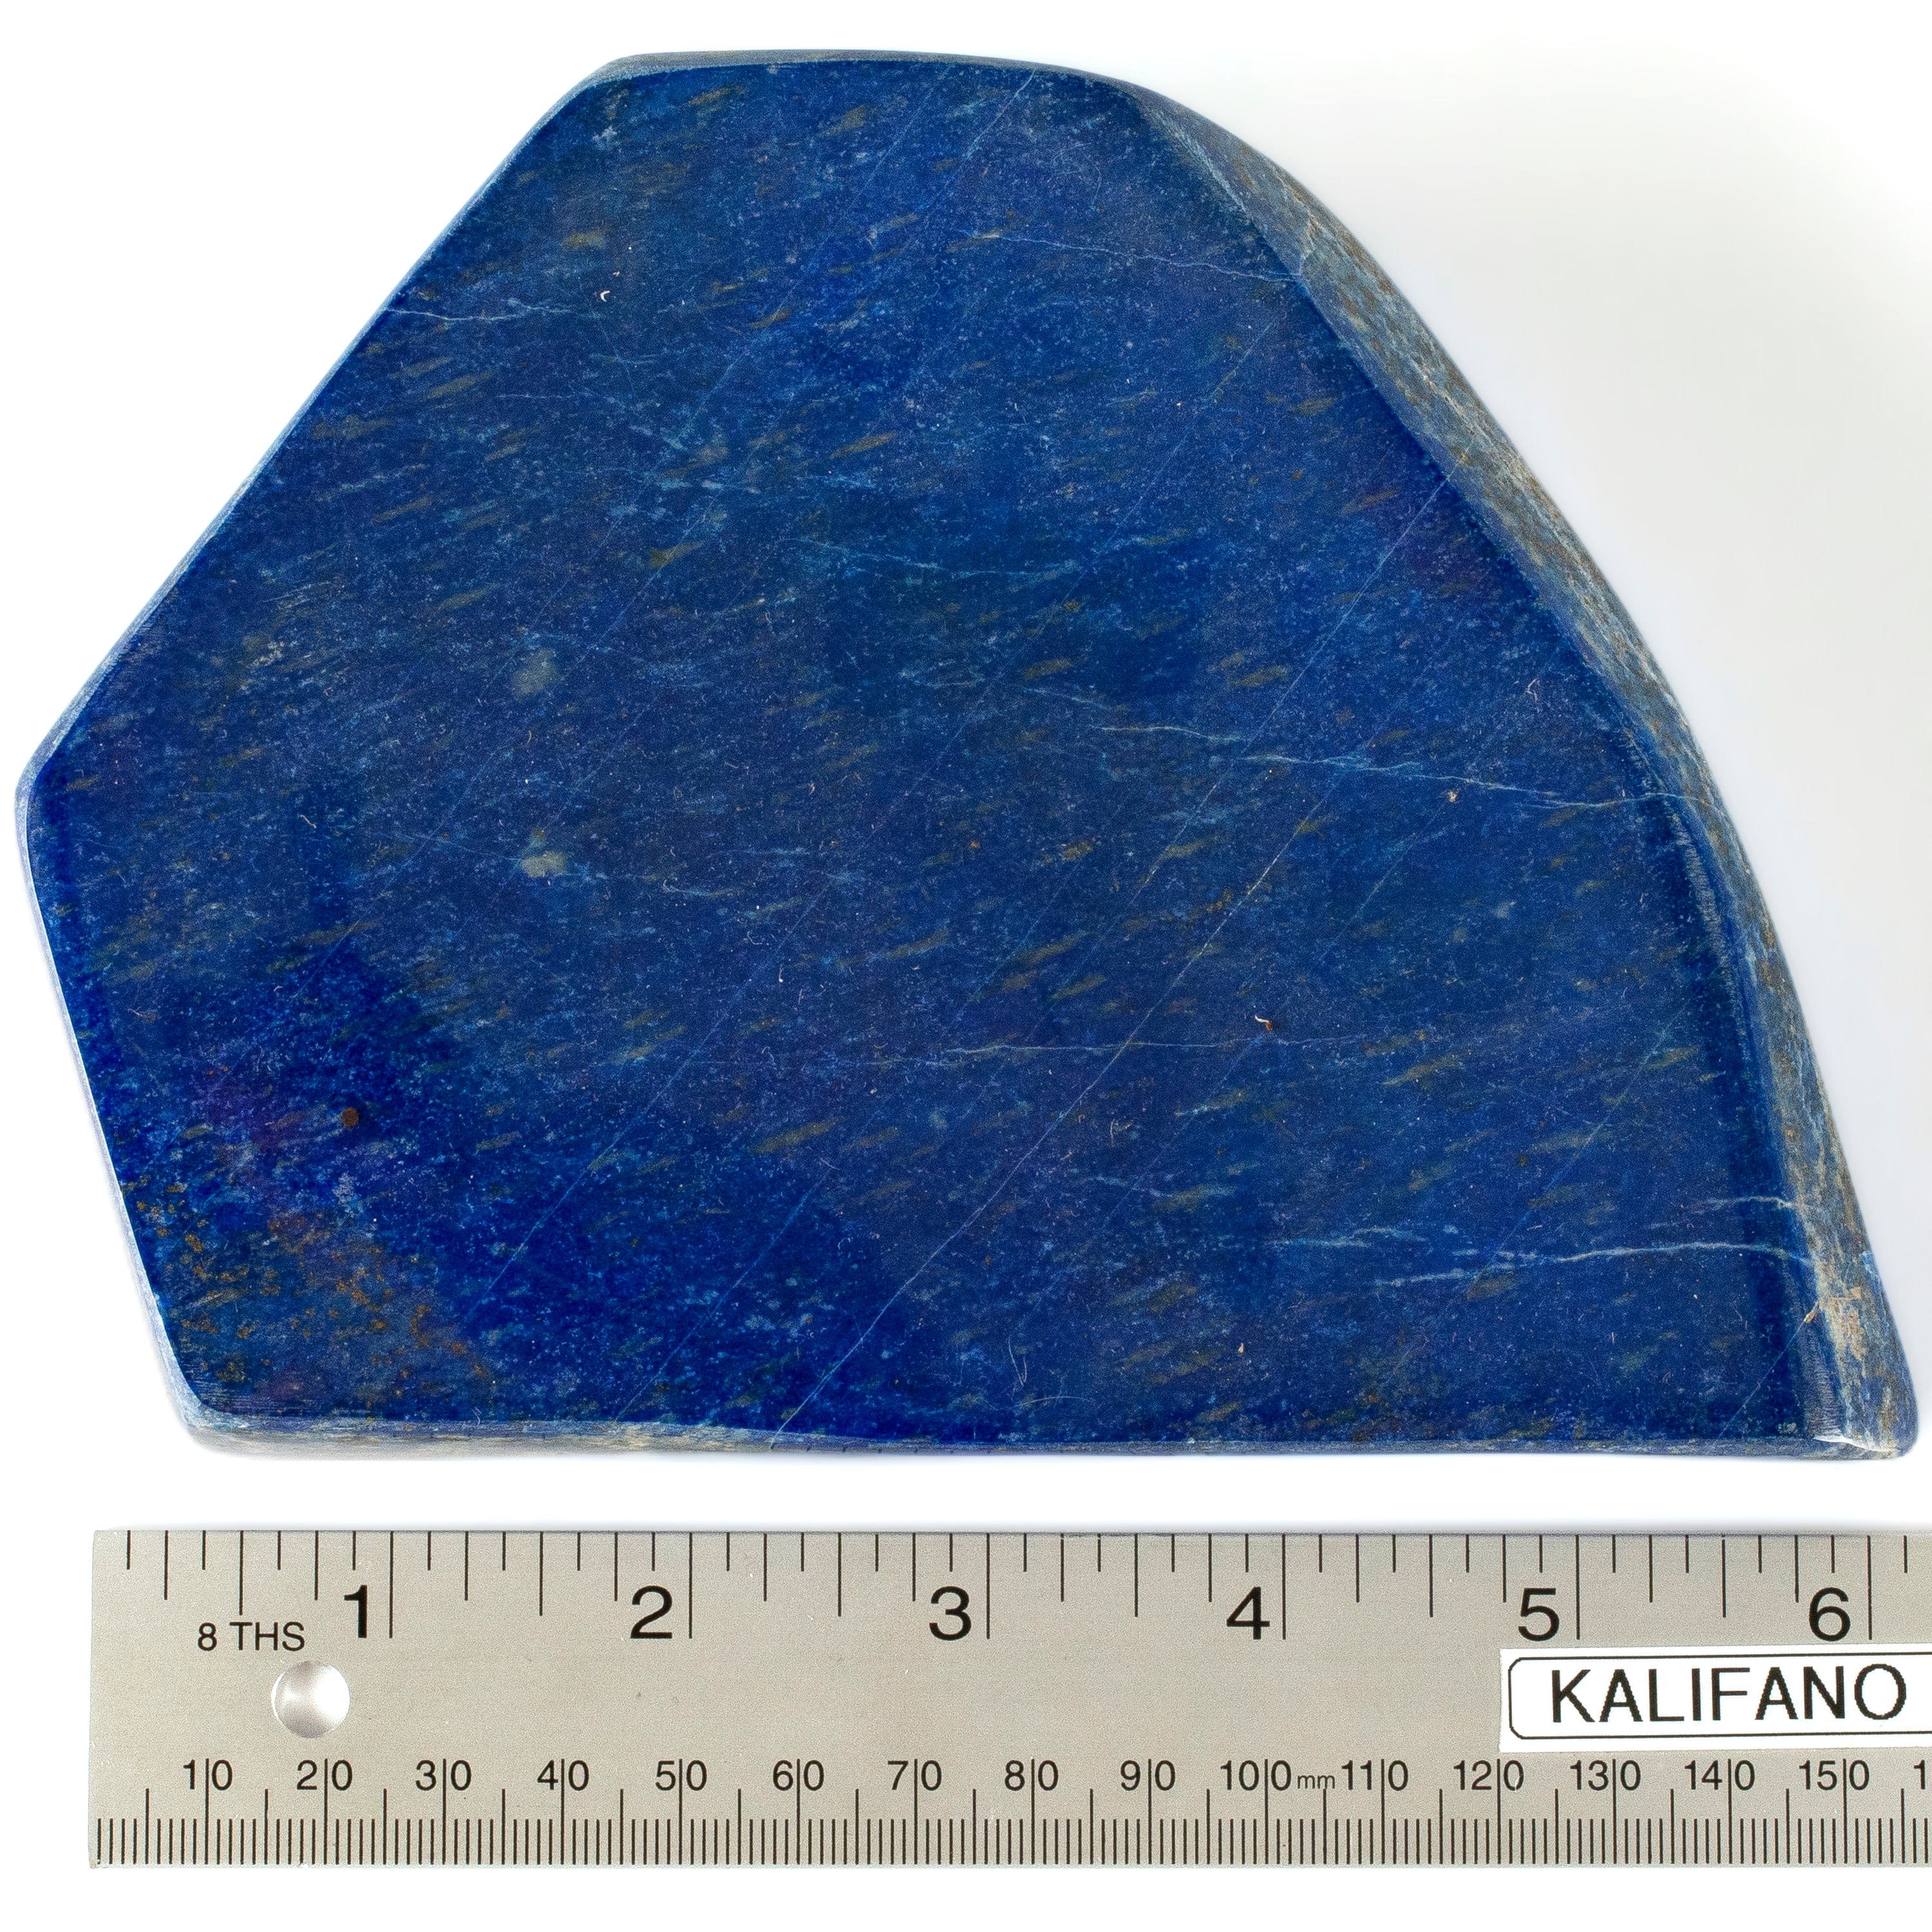 Kalifano Lapis Lapis Lazuli Freeform from Afghanistan - 6.5" / 1,080 grams LP1100.009